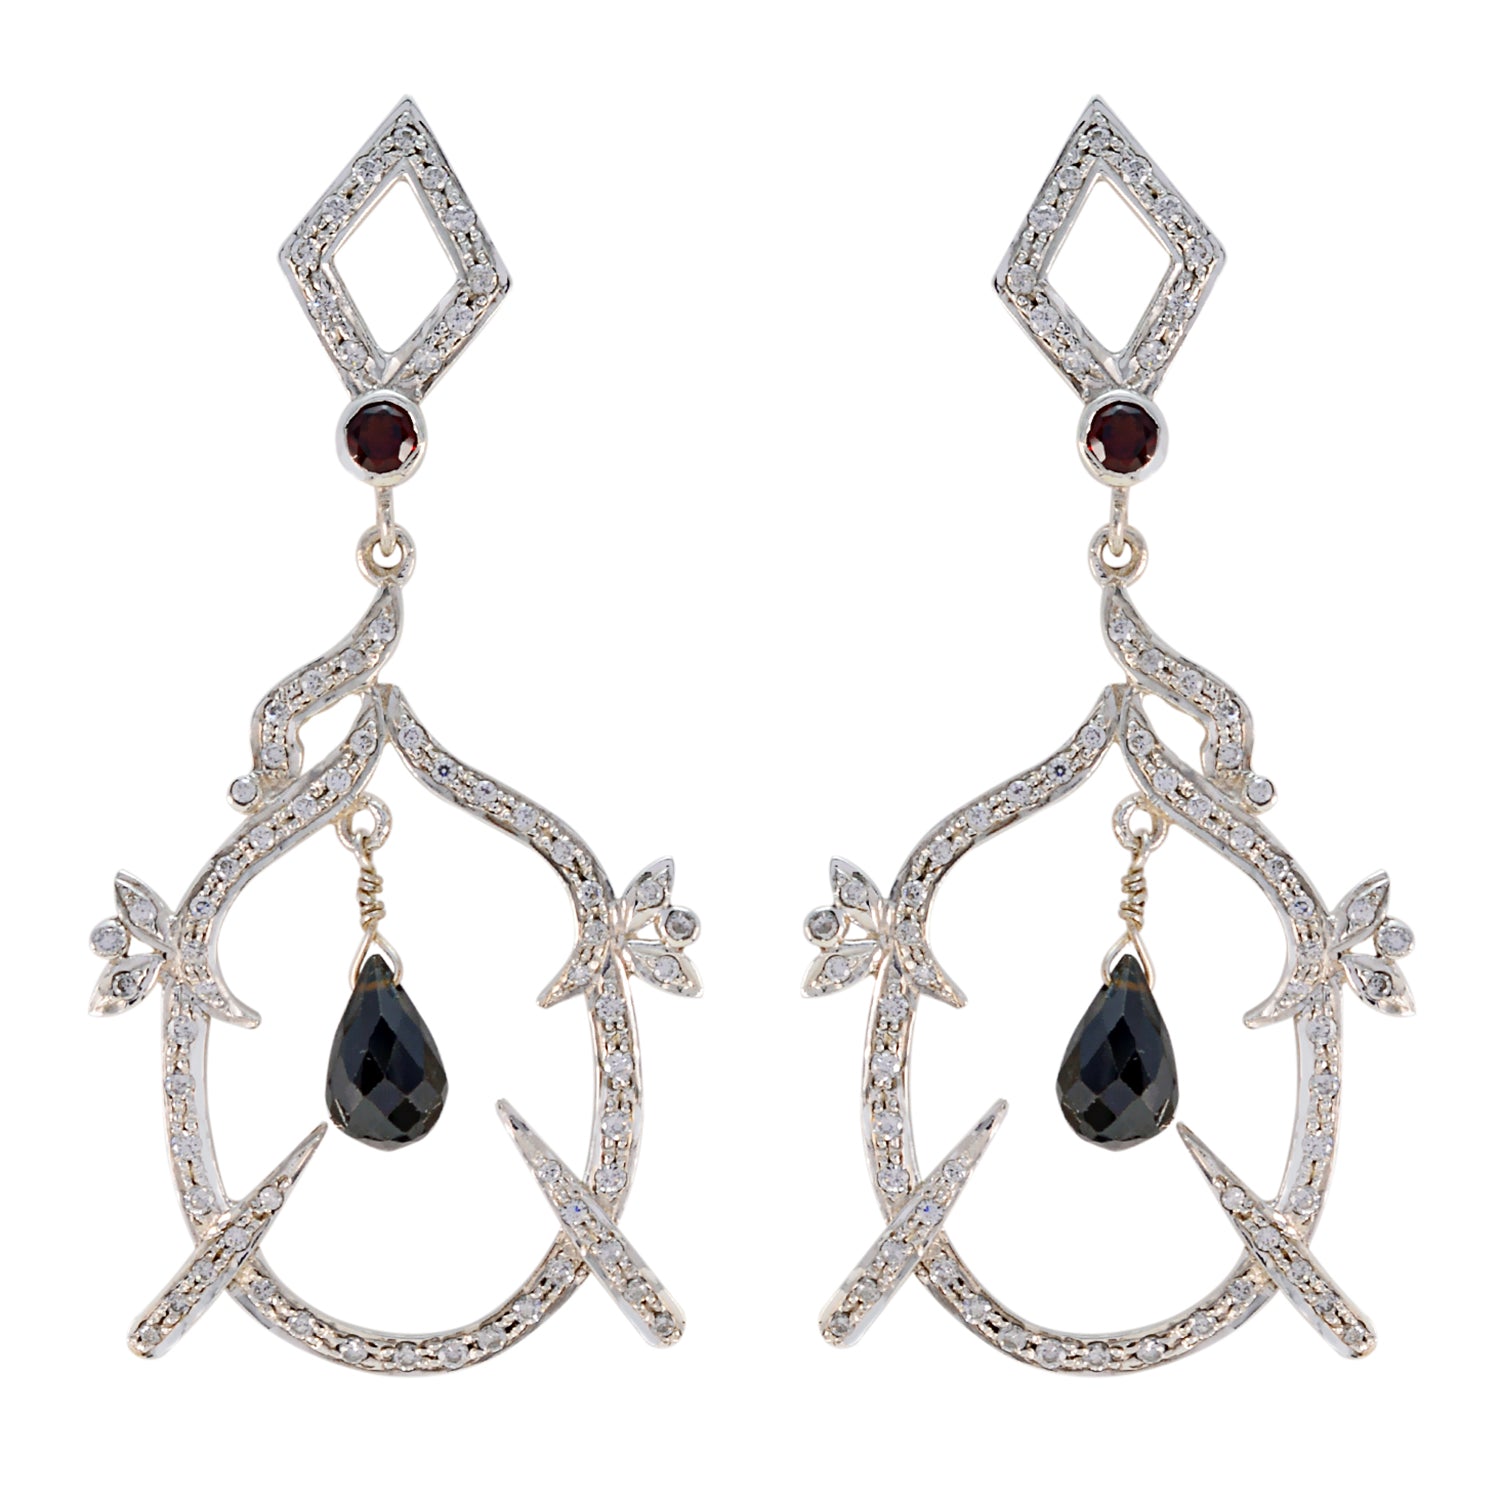 Riyo Good Gemstones multi shape Faceted Red Garnet Silver Earrings gift for new years day